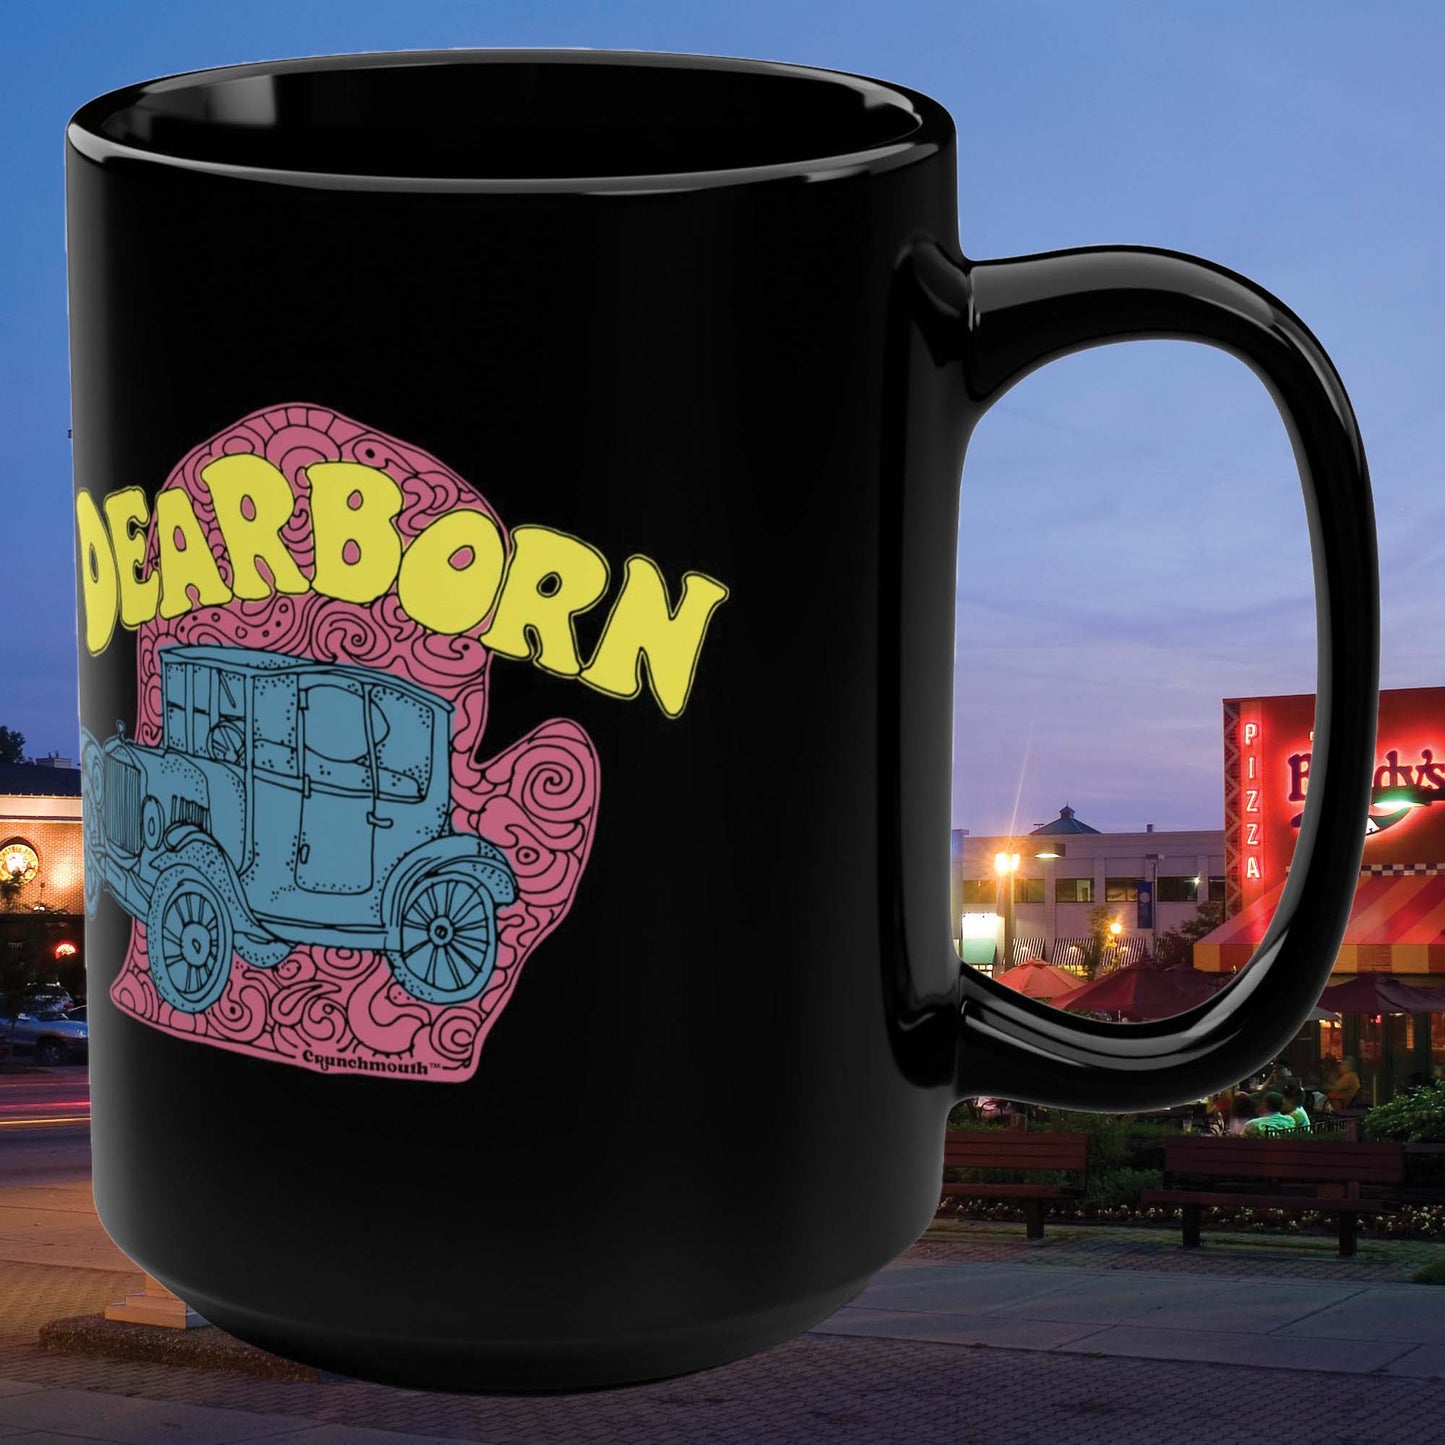 dearborn michigan black coffee mug gallery pic deerborn